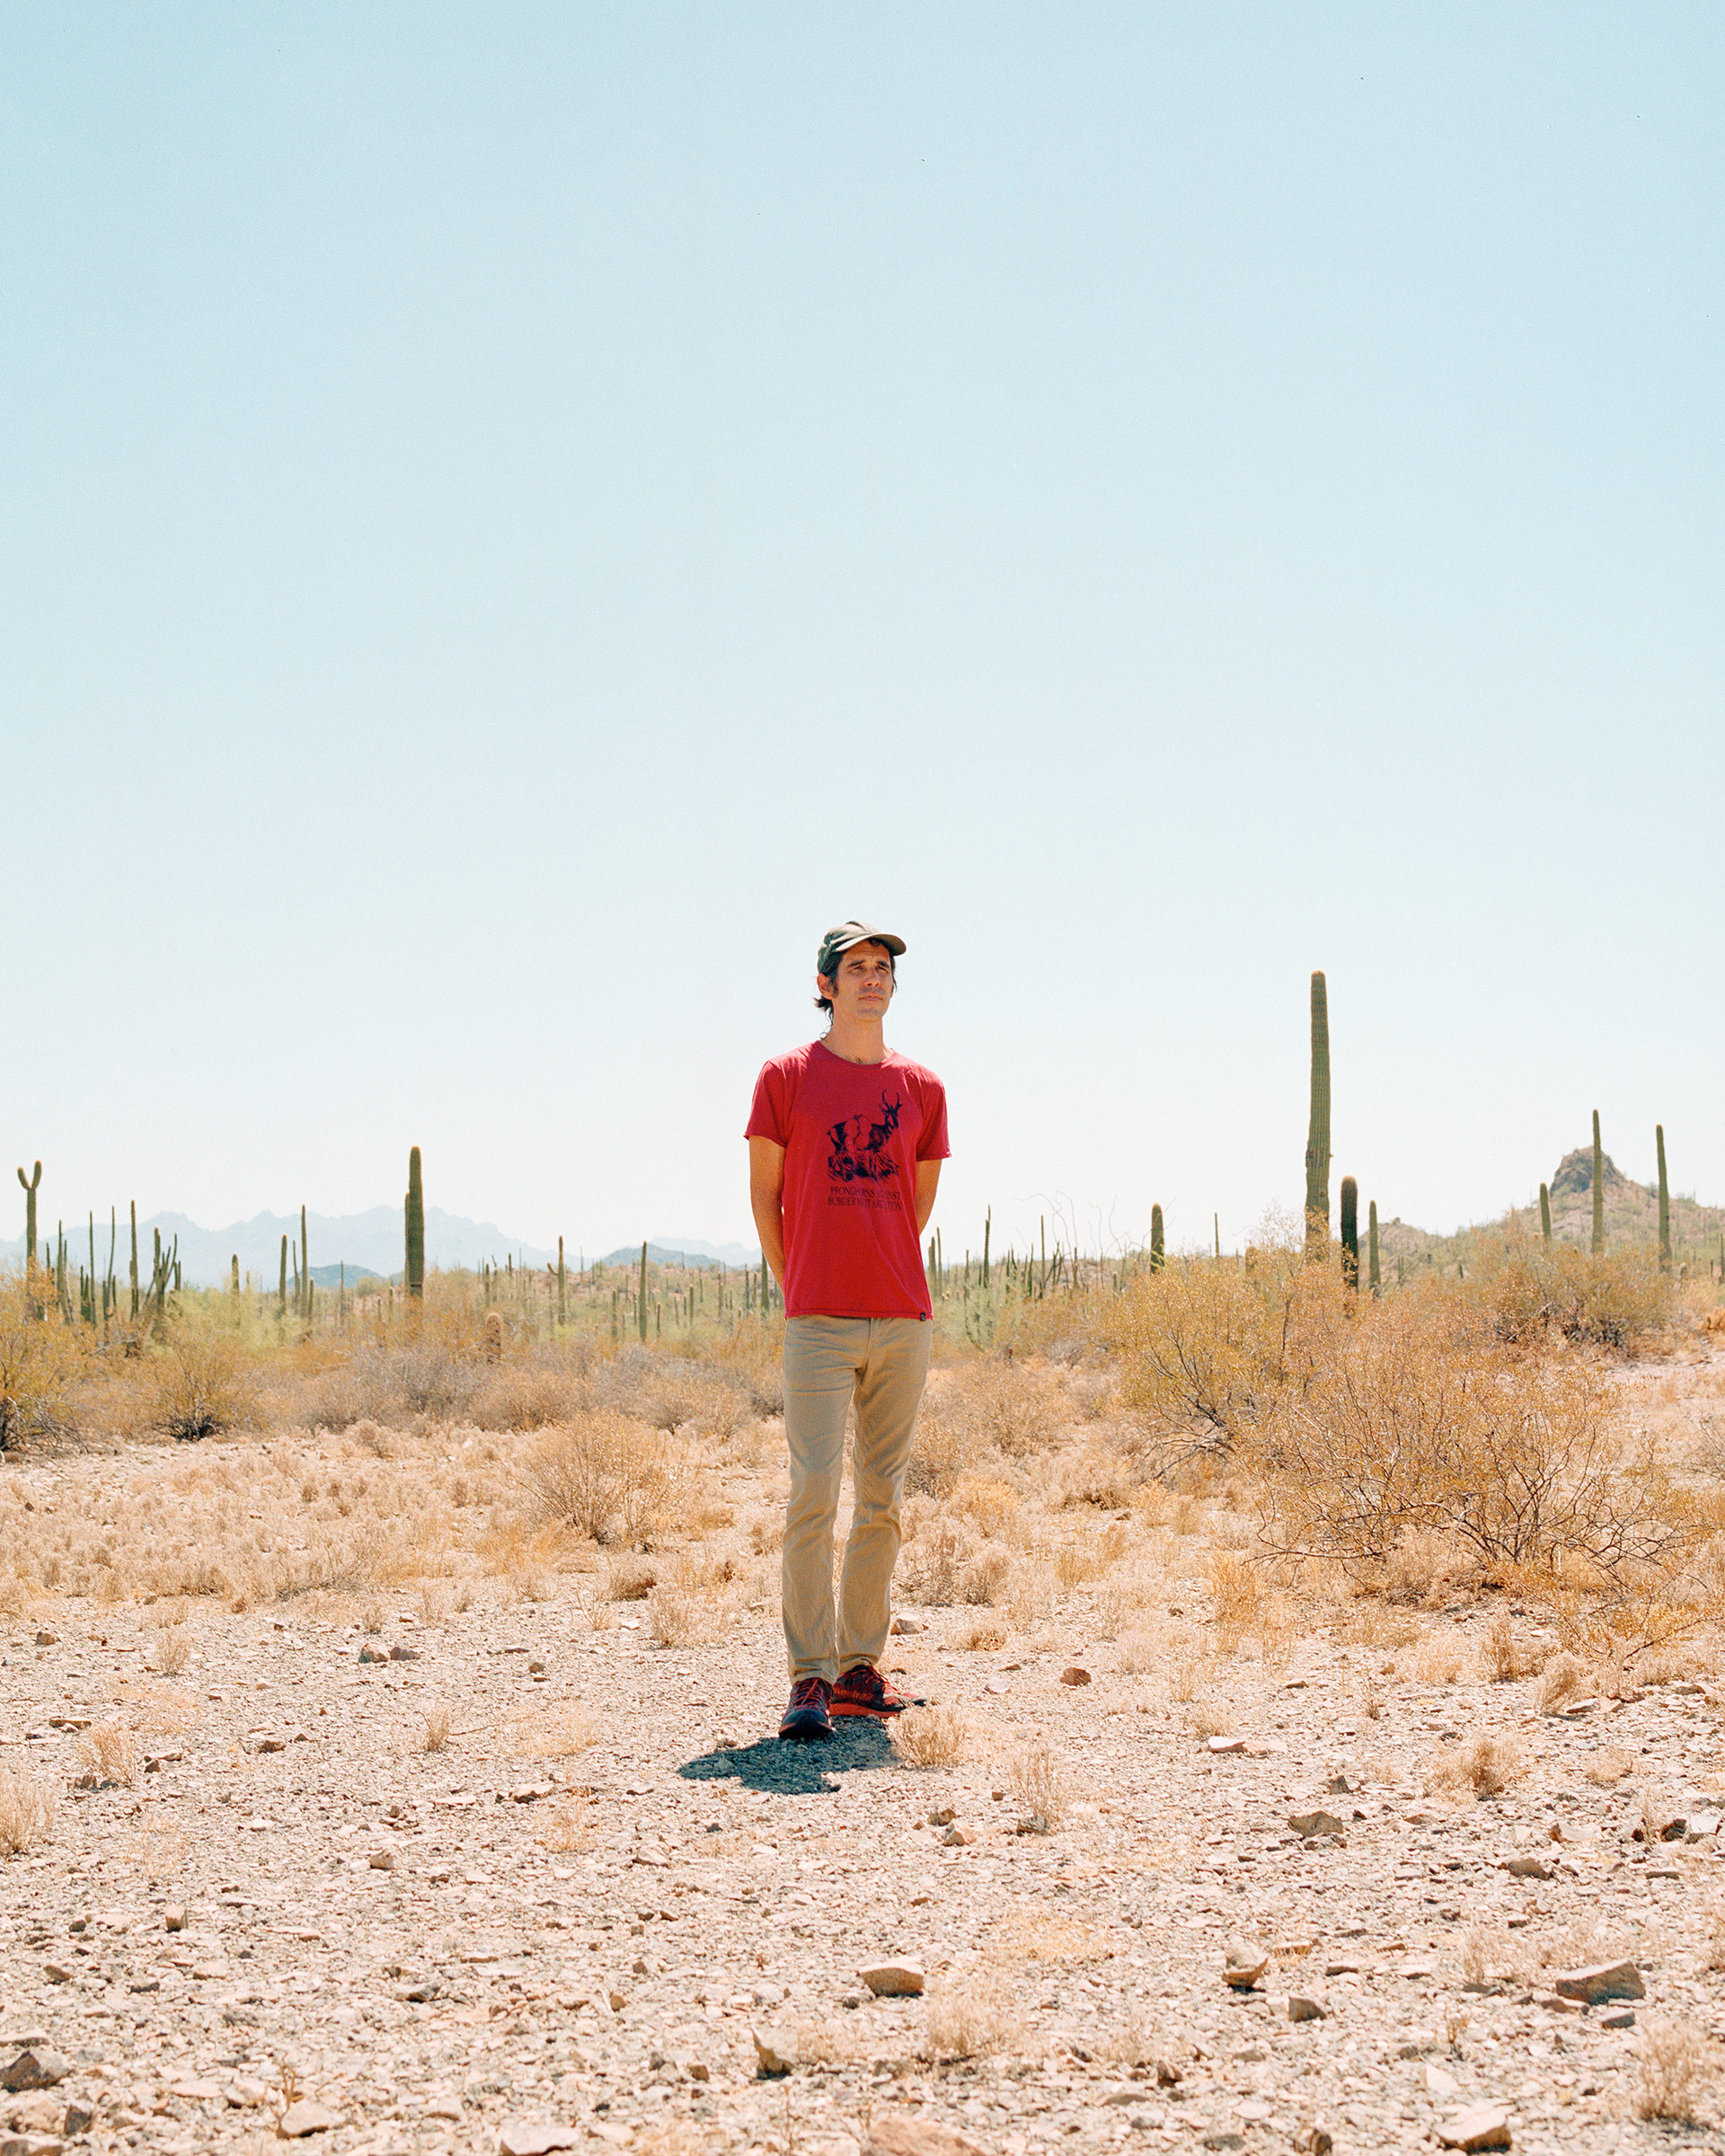 Scott Warren in the desert on the outskirts of Ajo, Ariz., on Sept 17. (Cassidy Araiza for TIME)